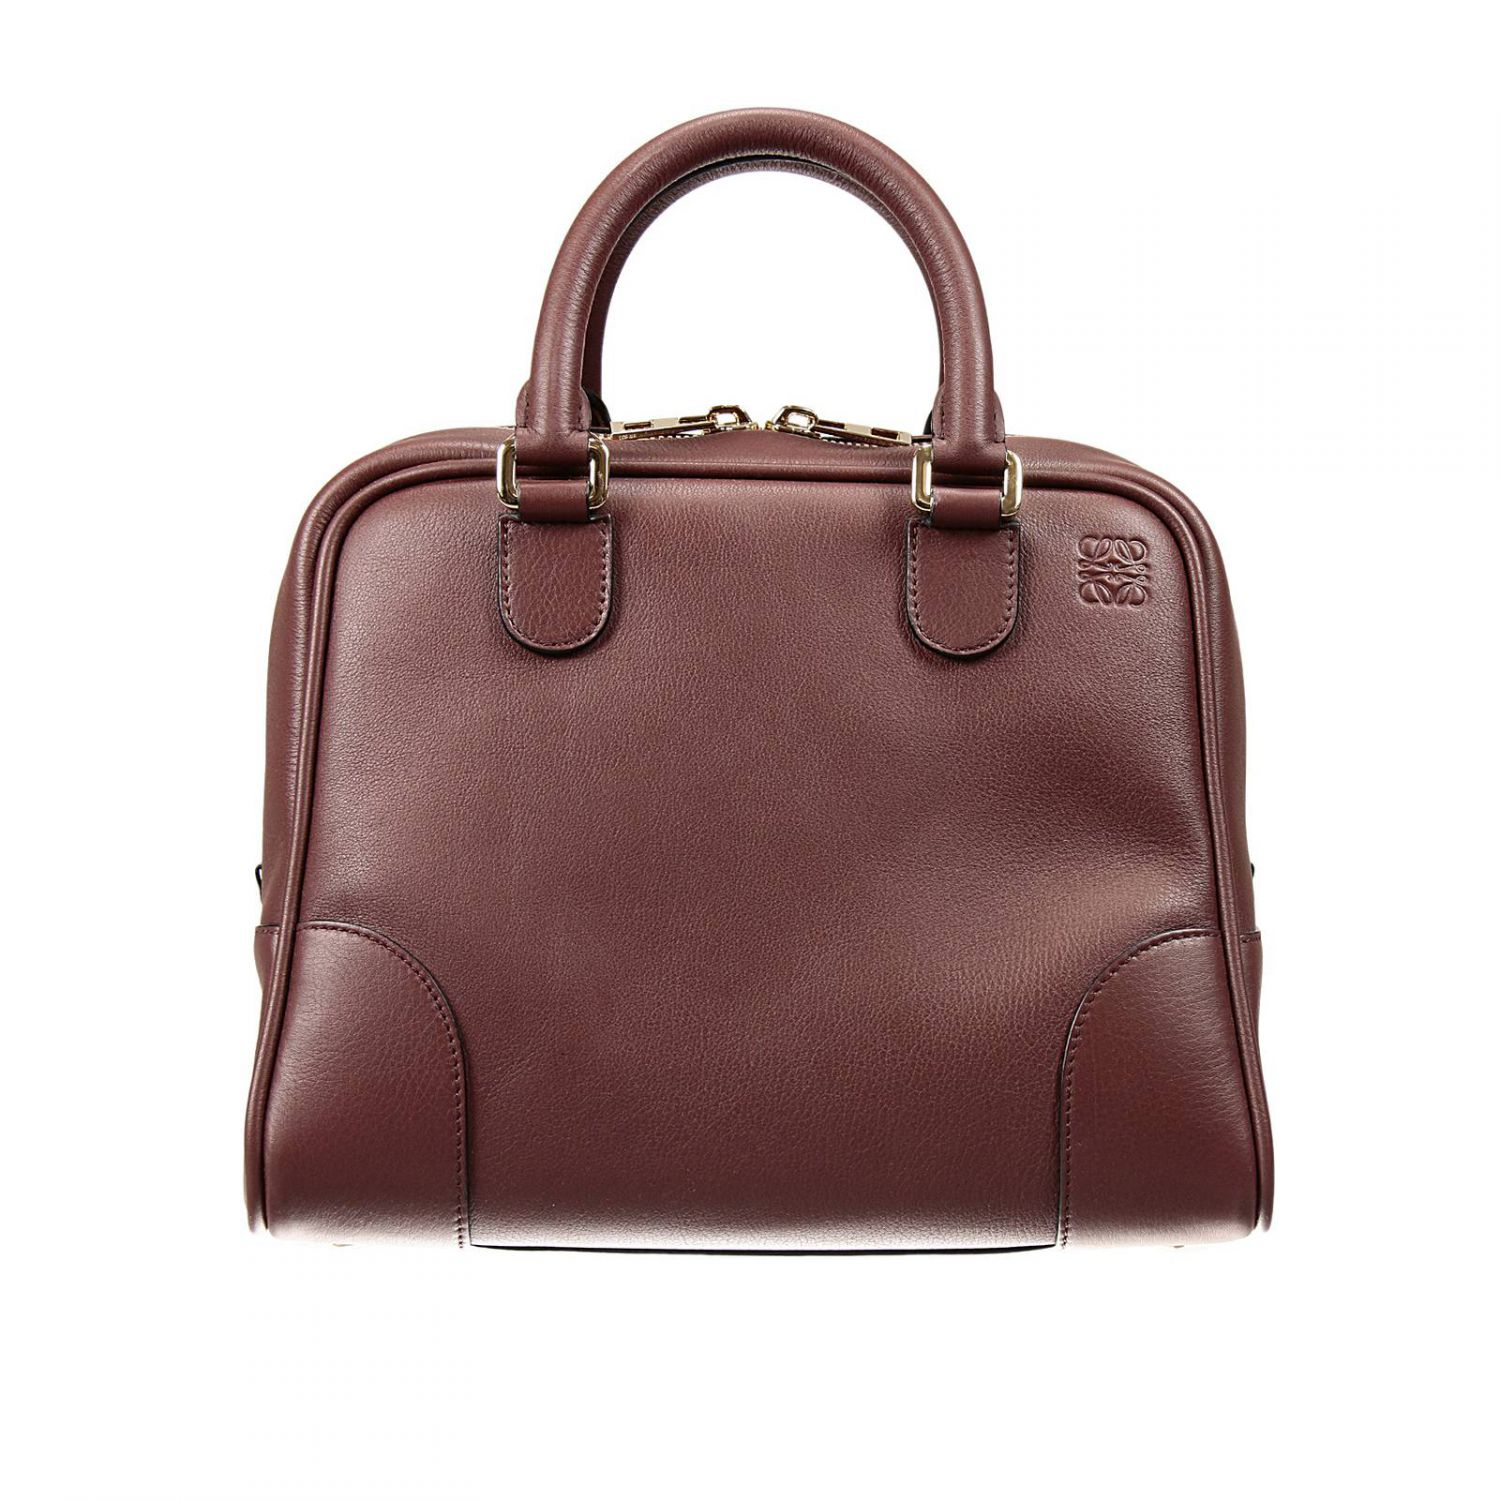 Lyst - Loewe Handbag Amazona Medium Leather in Brown